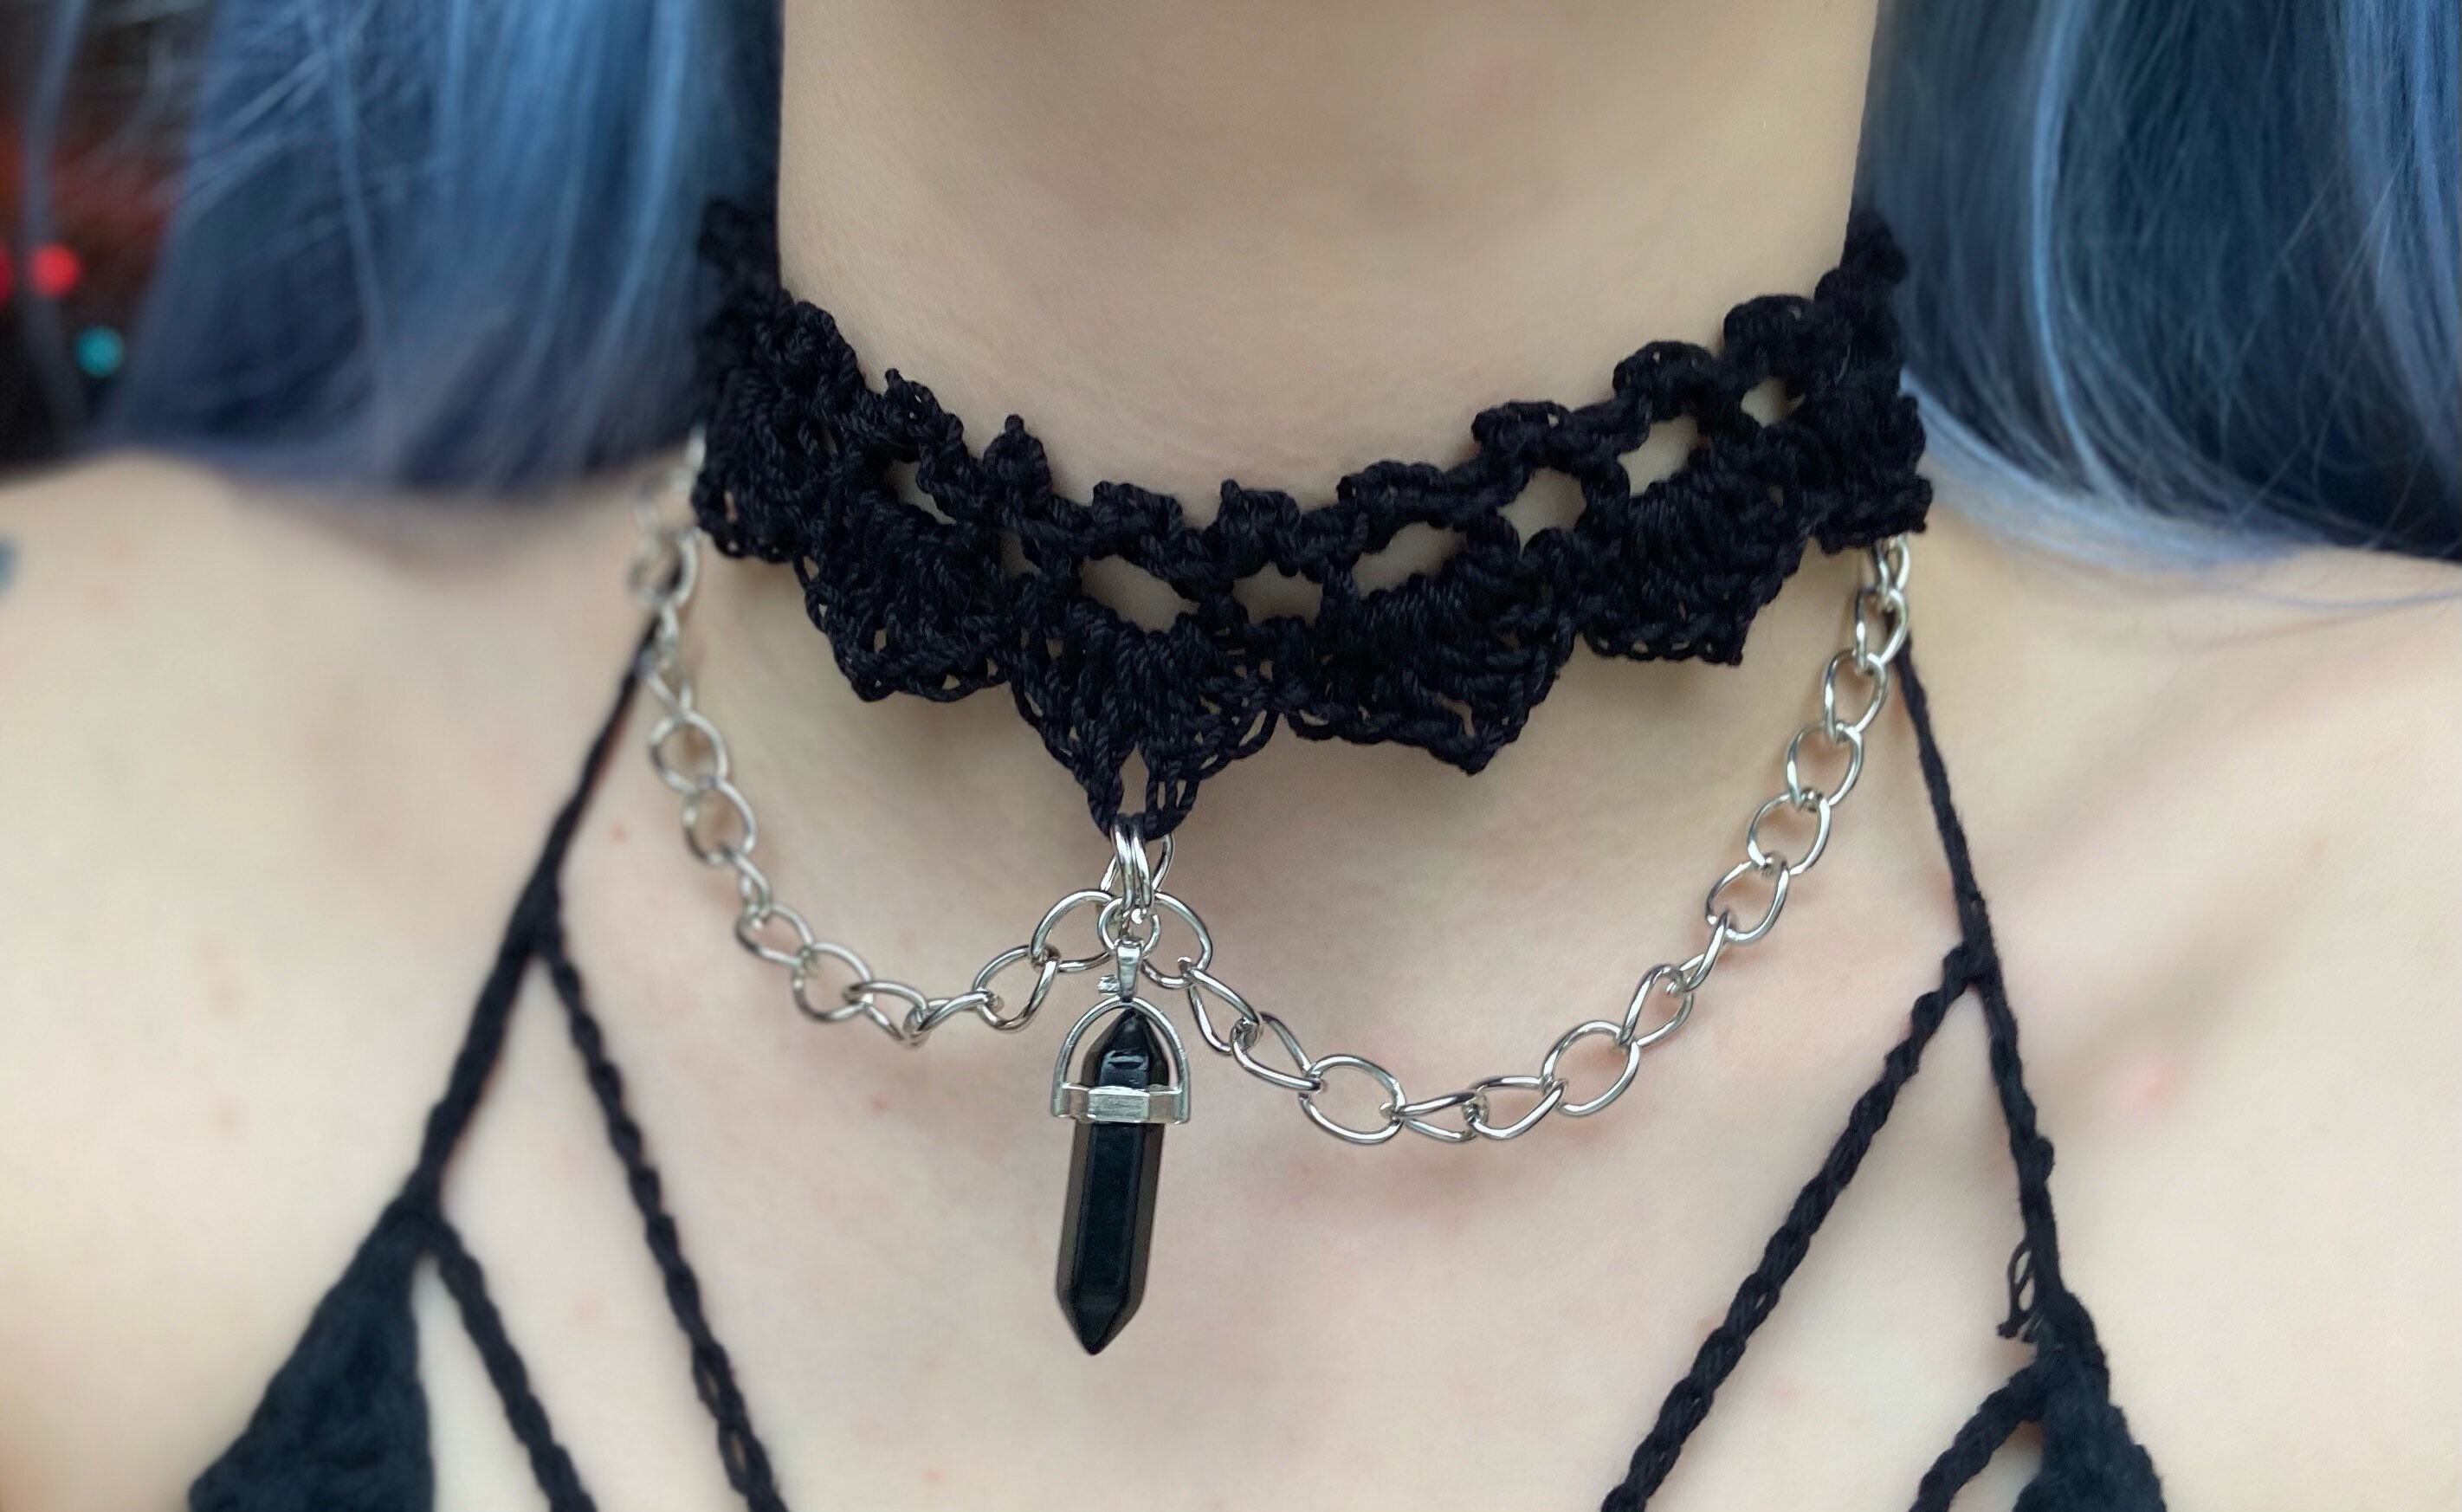 Gothic Choker Black Gem Chains Velvet Necklace Halloween Collar